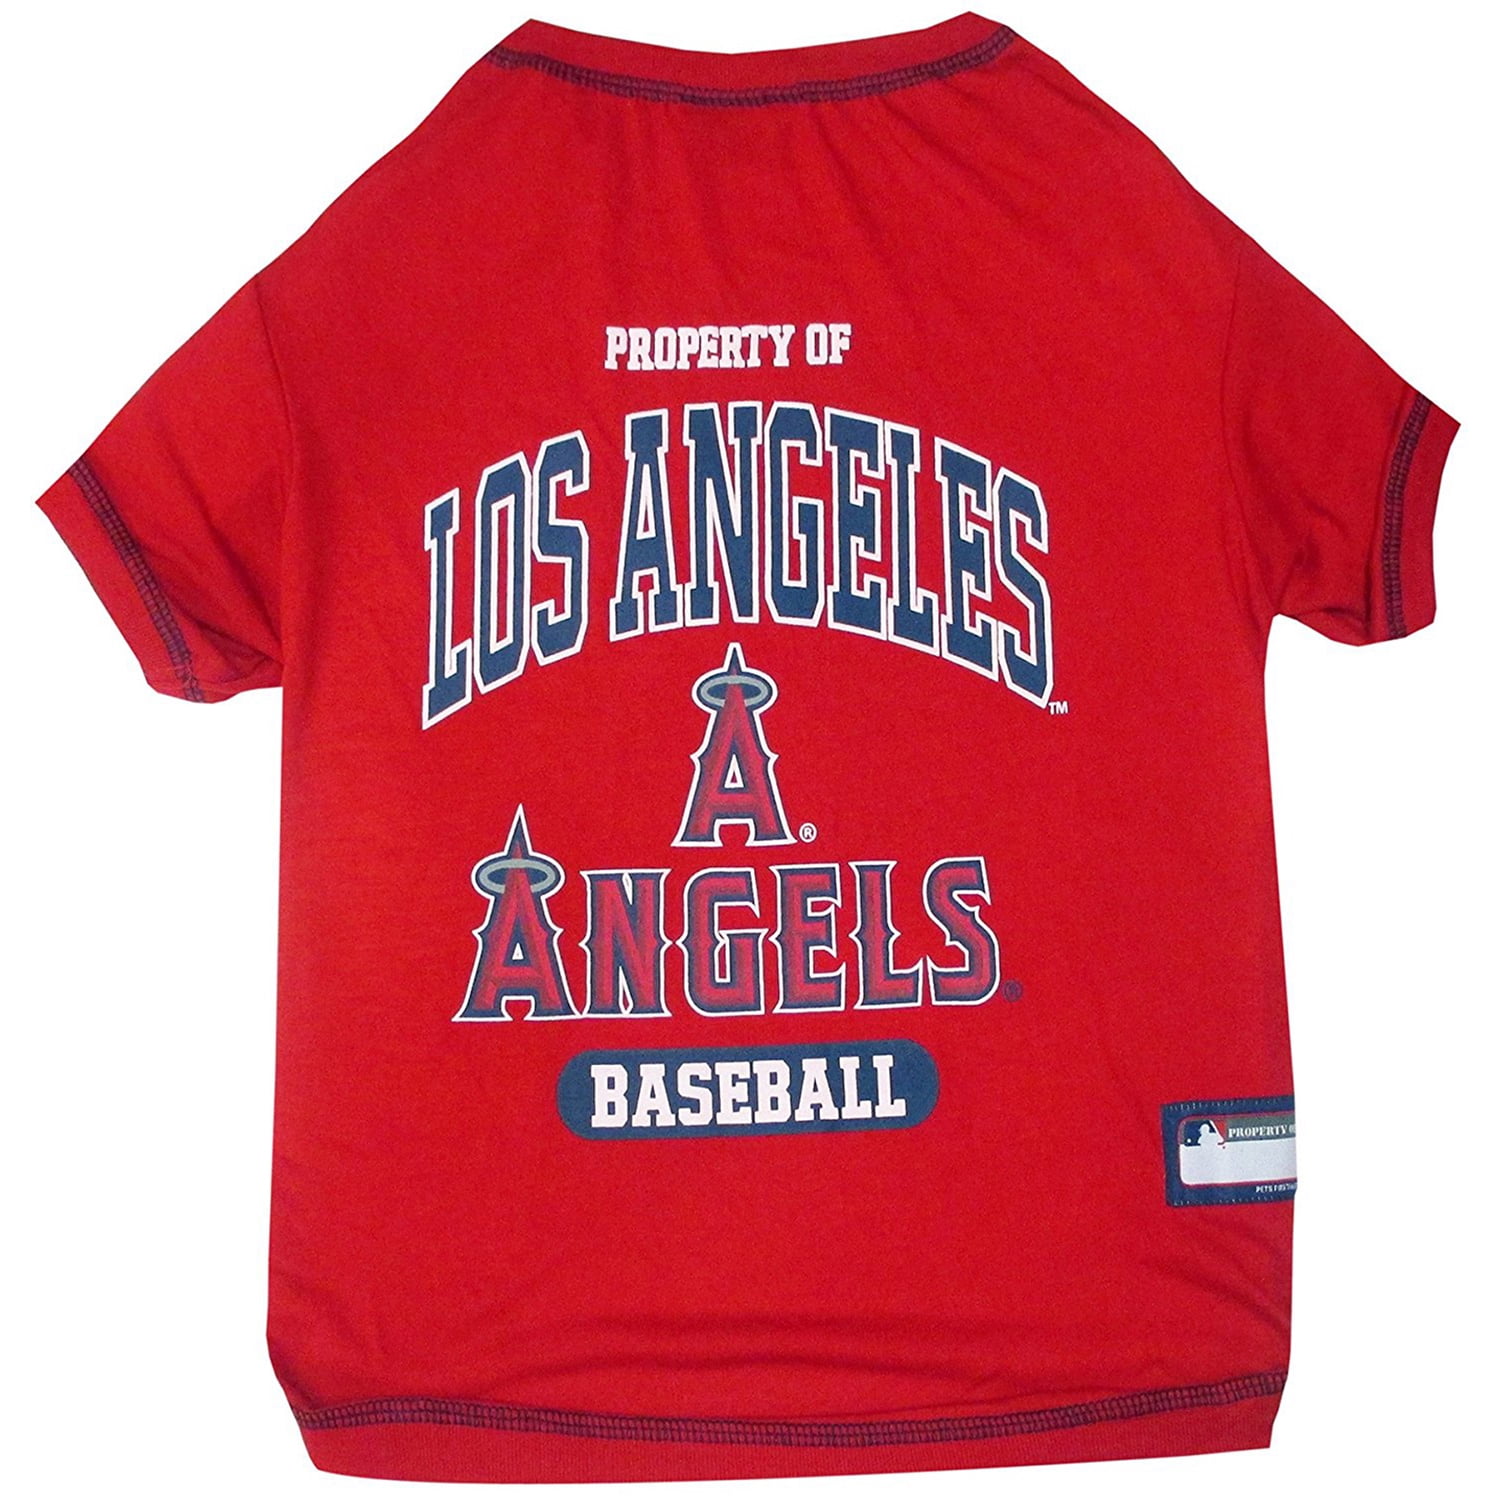 Los Angeles Dodgers Pet T-Shirt - XL